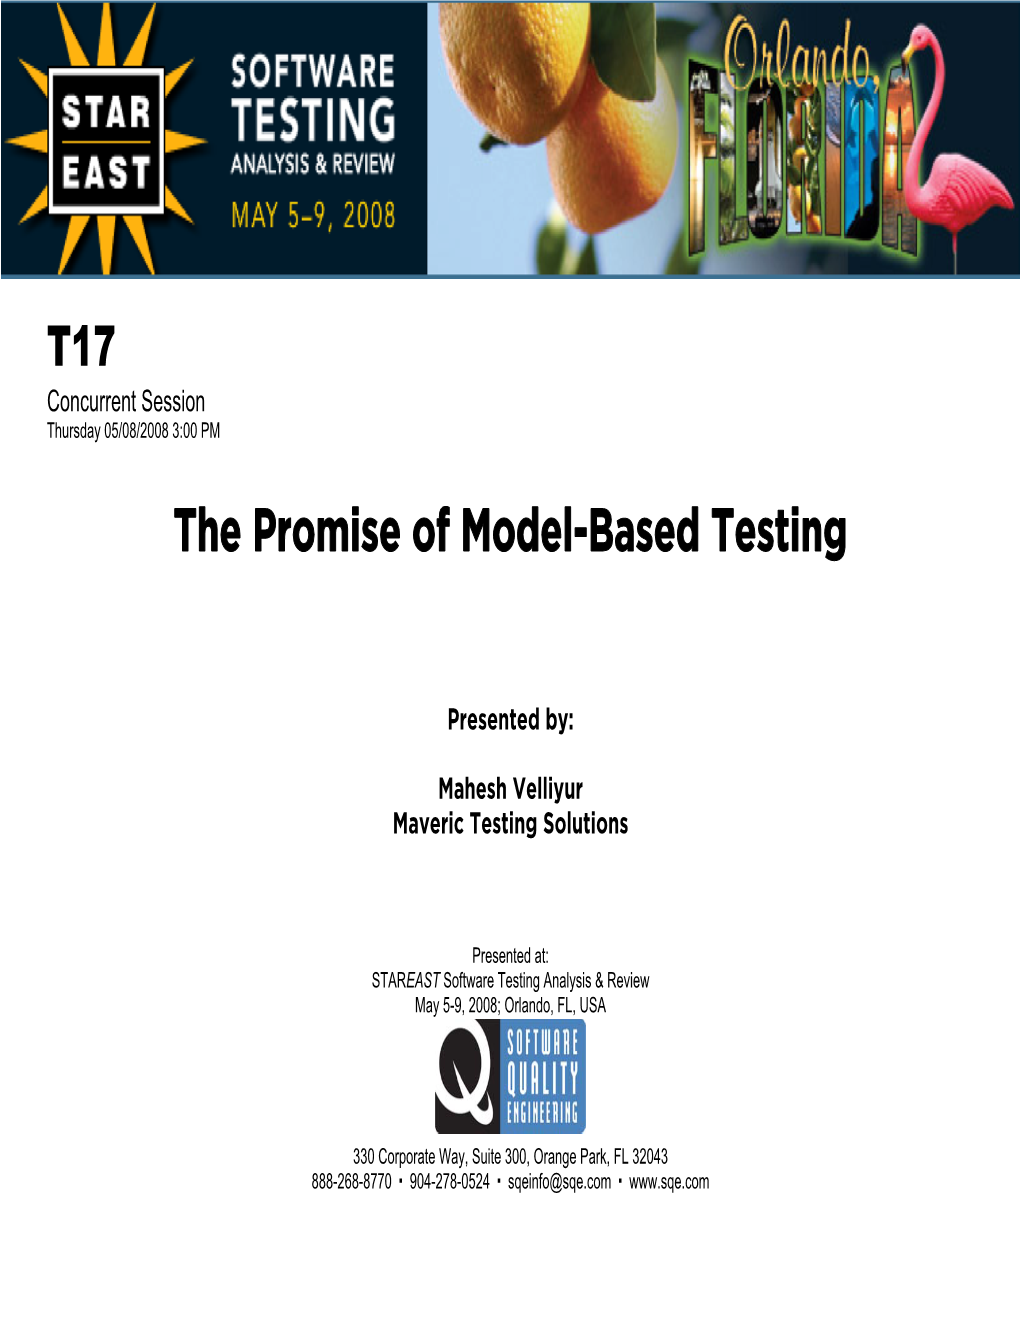 The Promise of Model-Based Testing